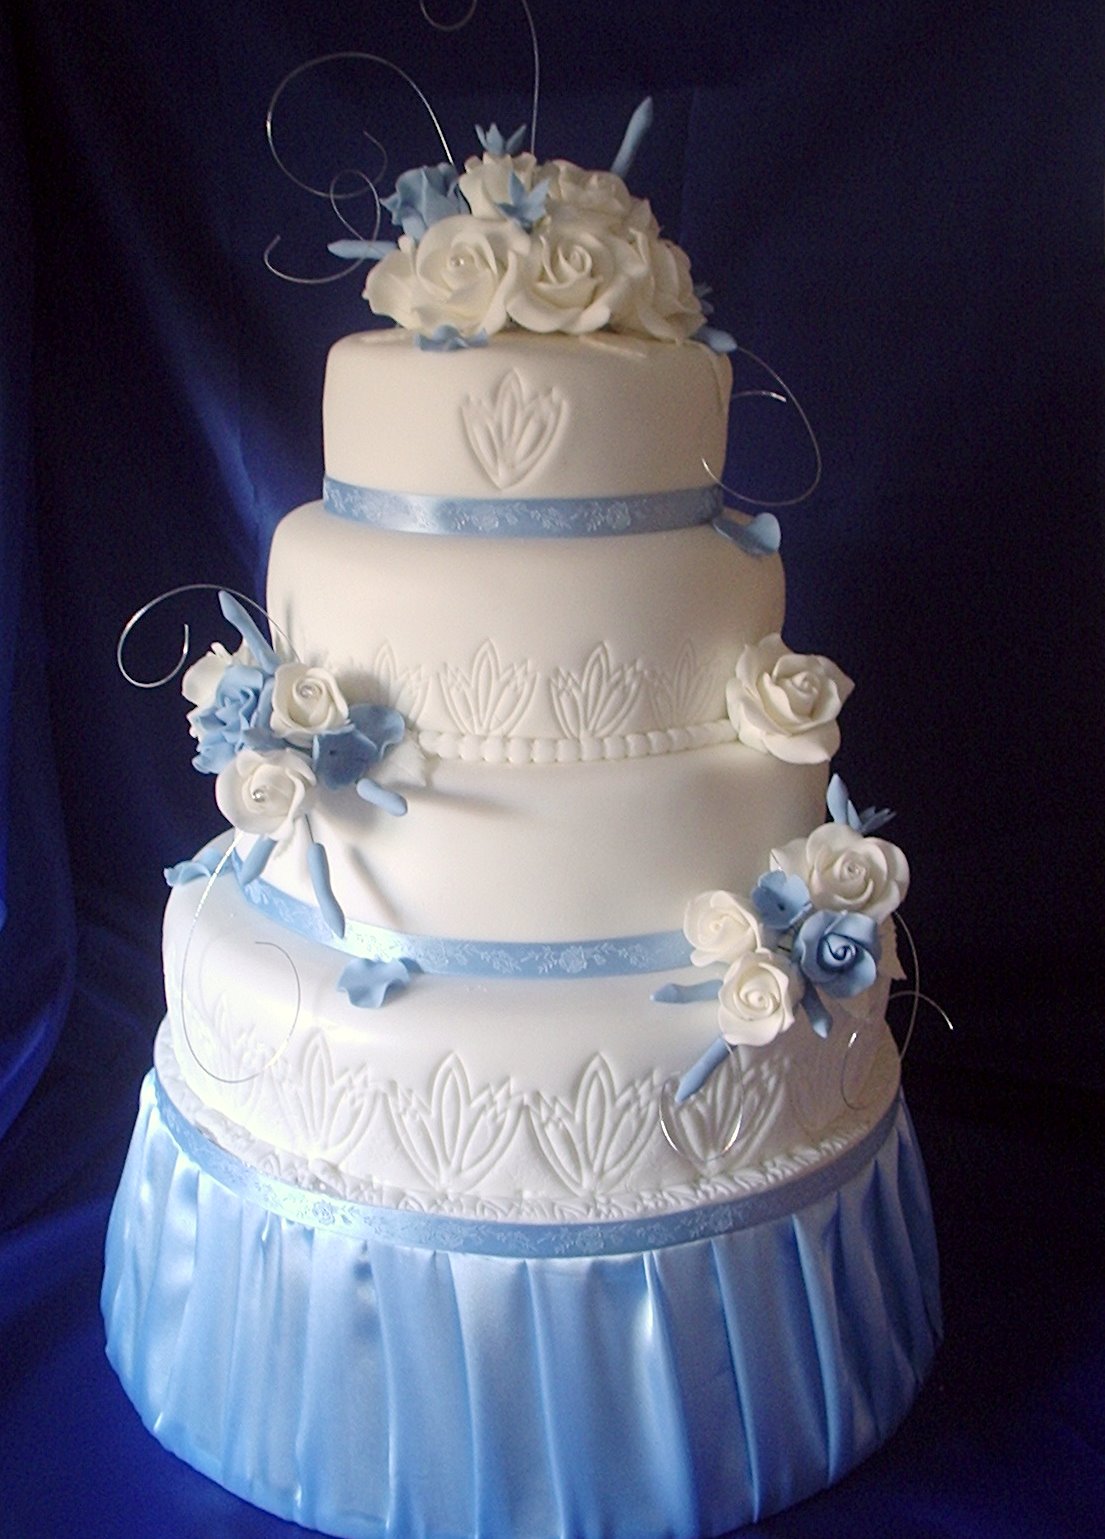 blue cake.jpg